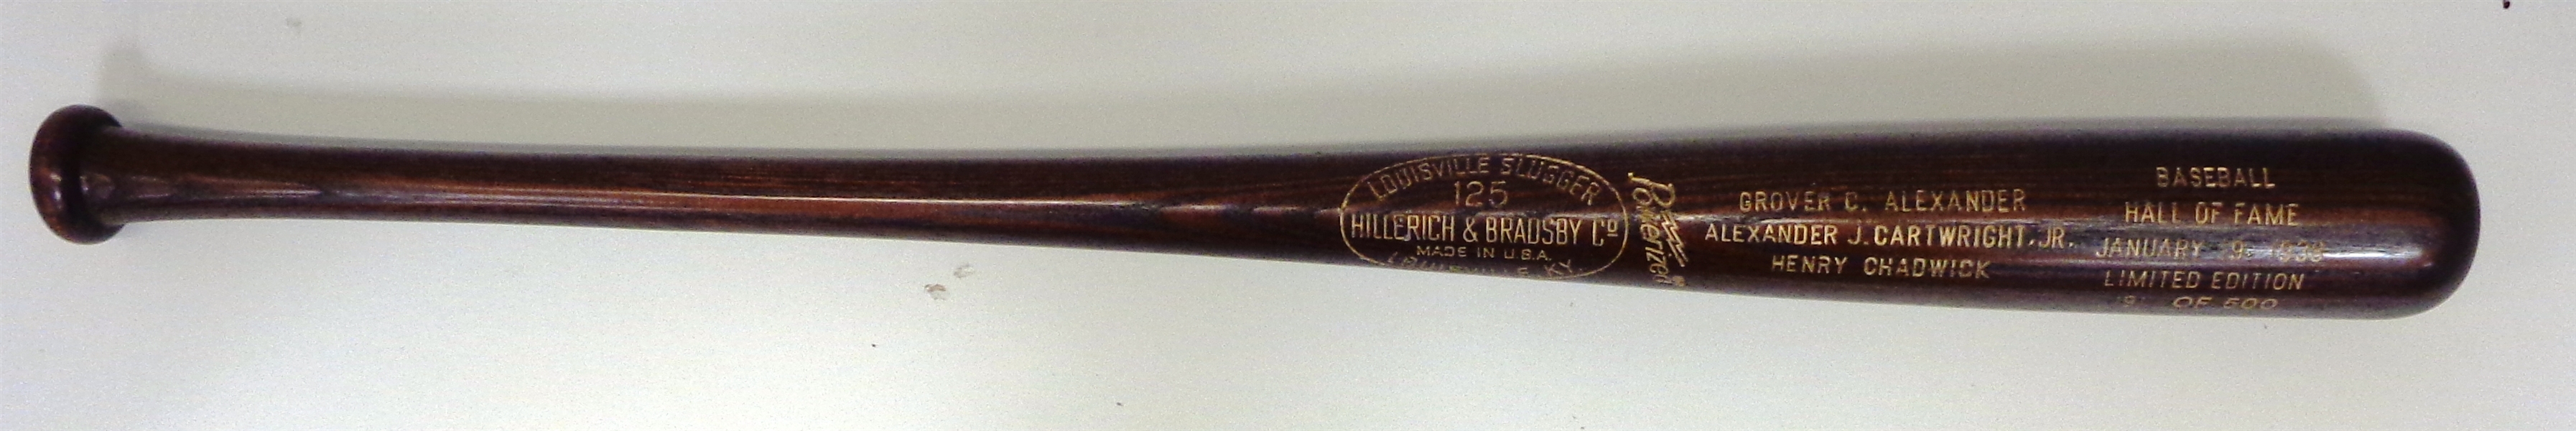 1938 Baseball Hall of Fame Commemorative Bat